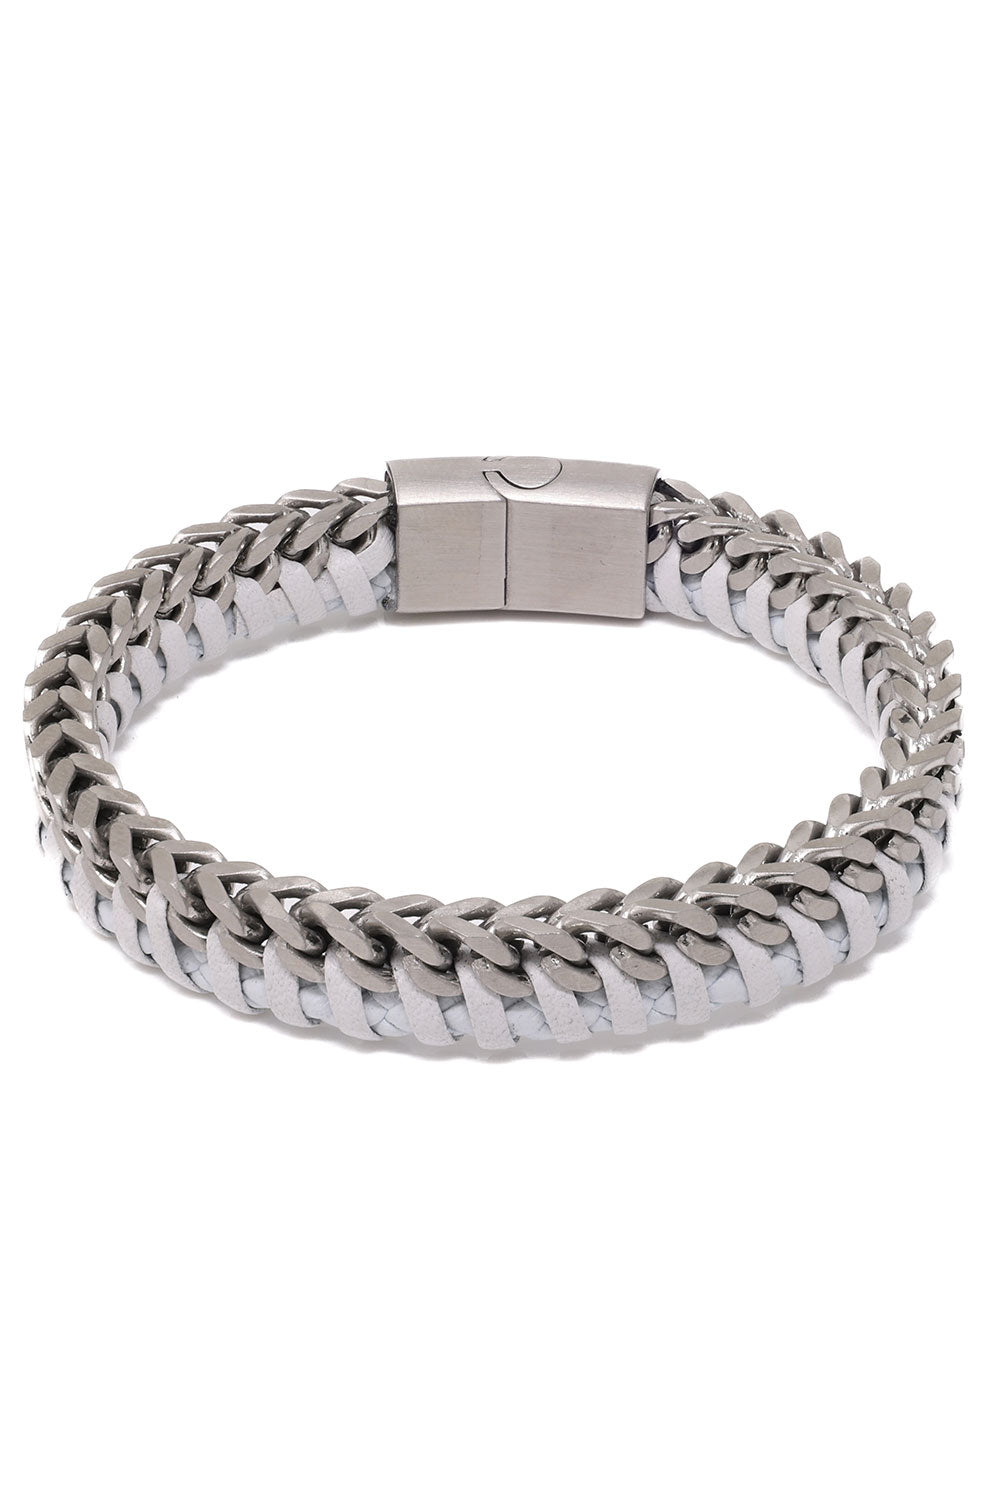 Barabas Unisex Braided Leather Metal Bangle Bracelets 4BMS01 White Silver